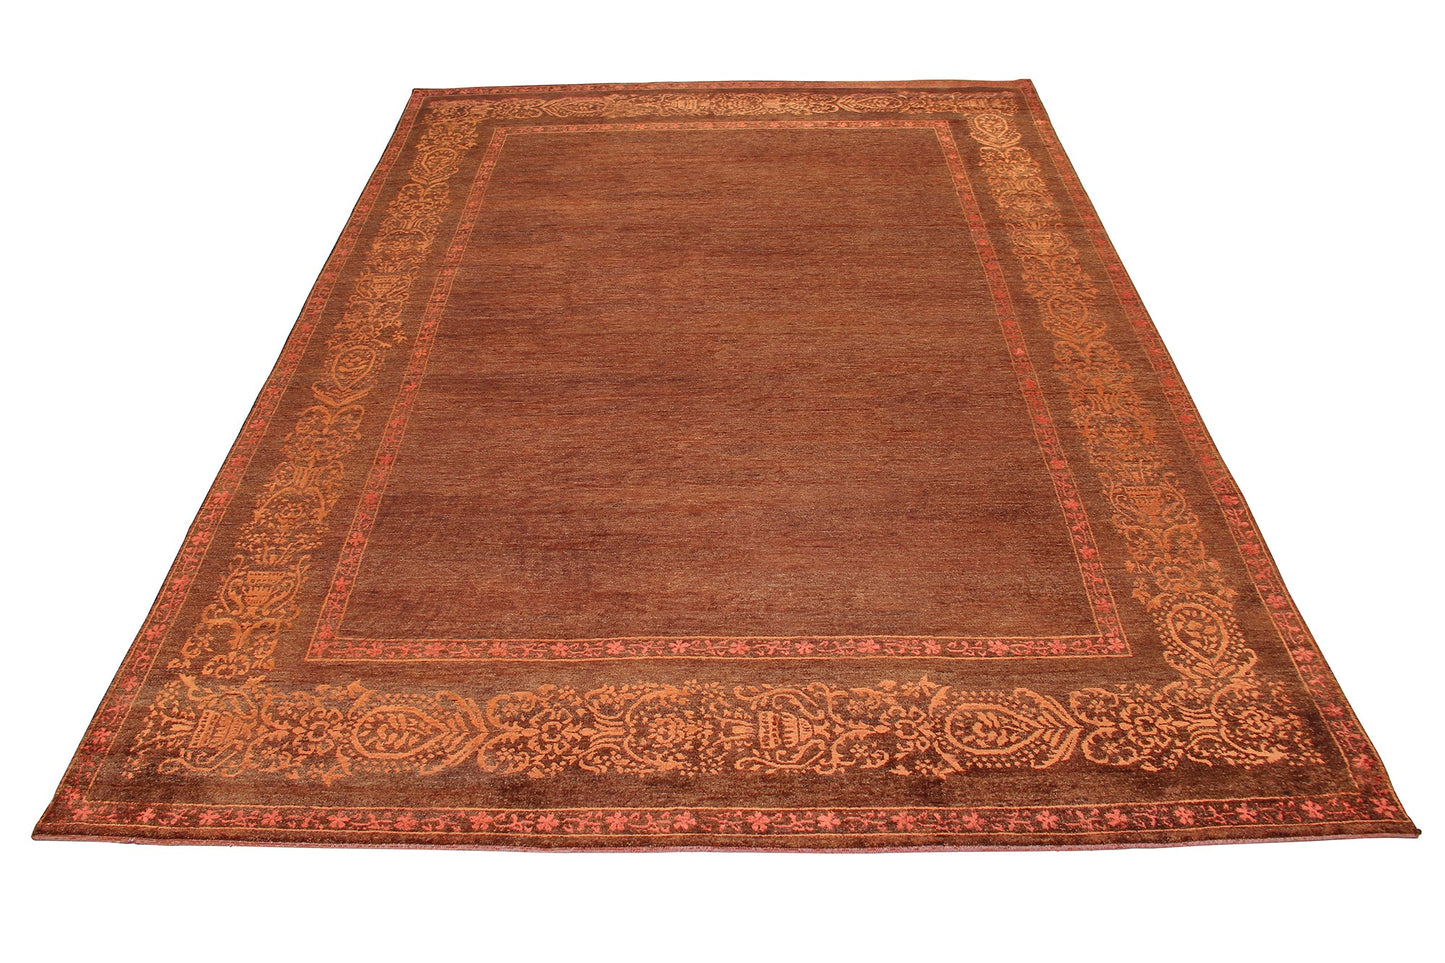 Modern Handmade Indian Carpet product image #27556211720362